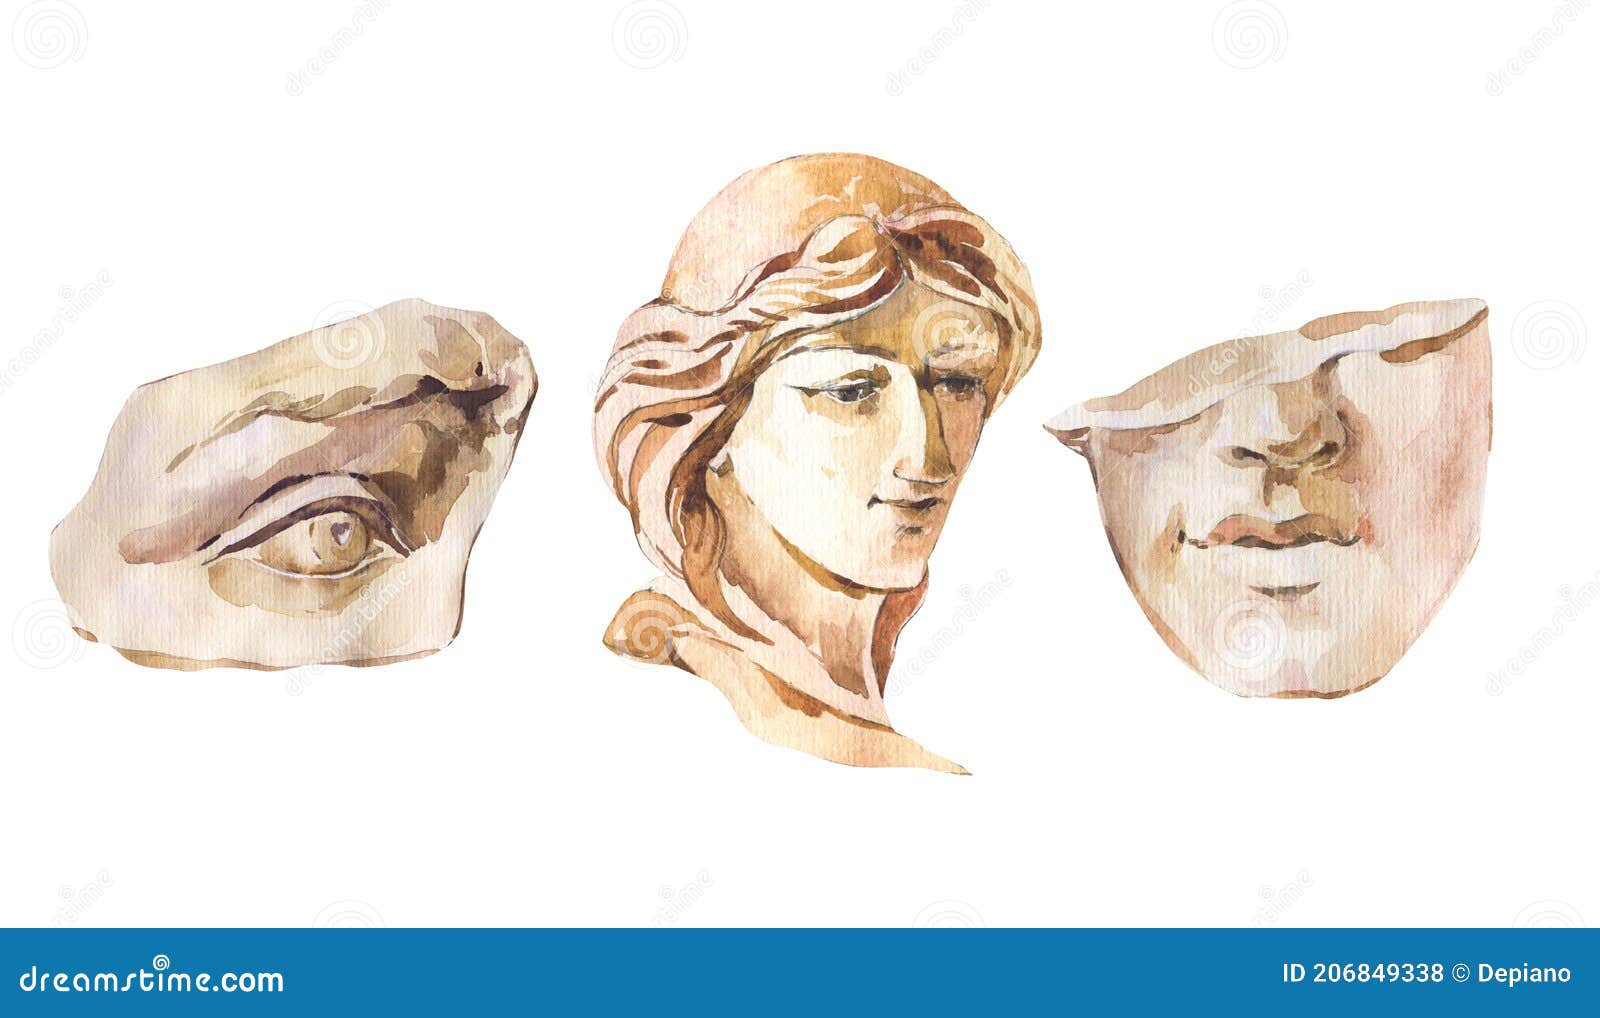 greek sculpture david eye, woman face. classical head sculpture,   dark academia vintage 